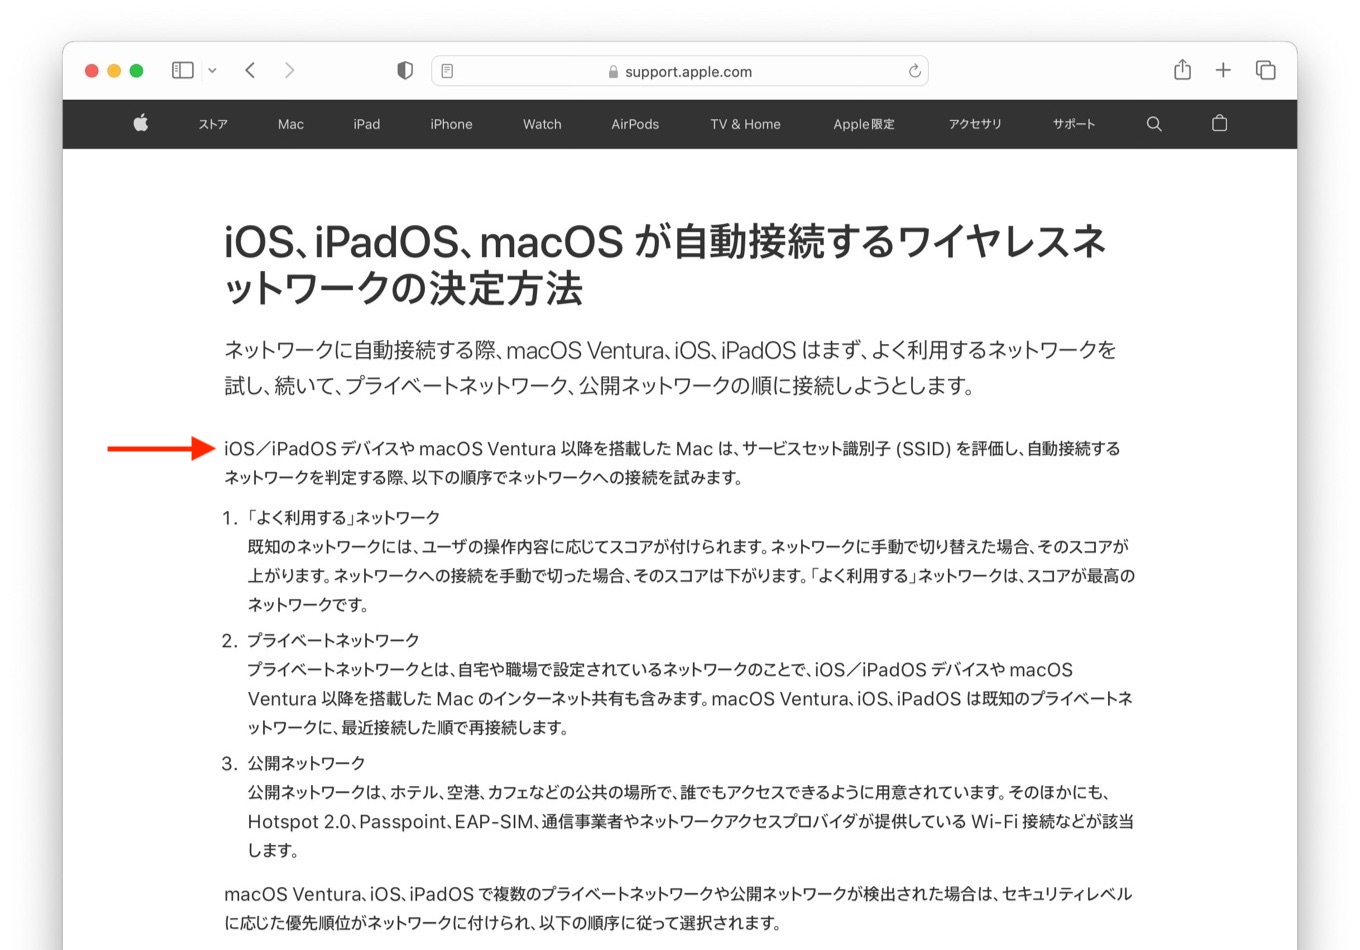 iOS、iPadOS、macOS が自動接続するワイヤレスネットワークの決定方法